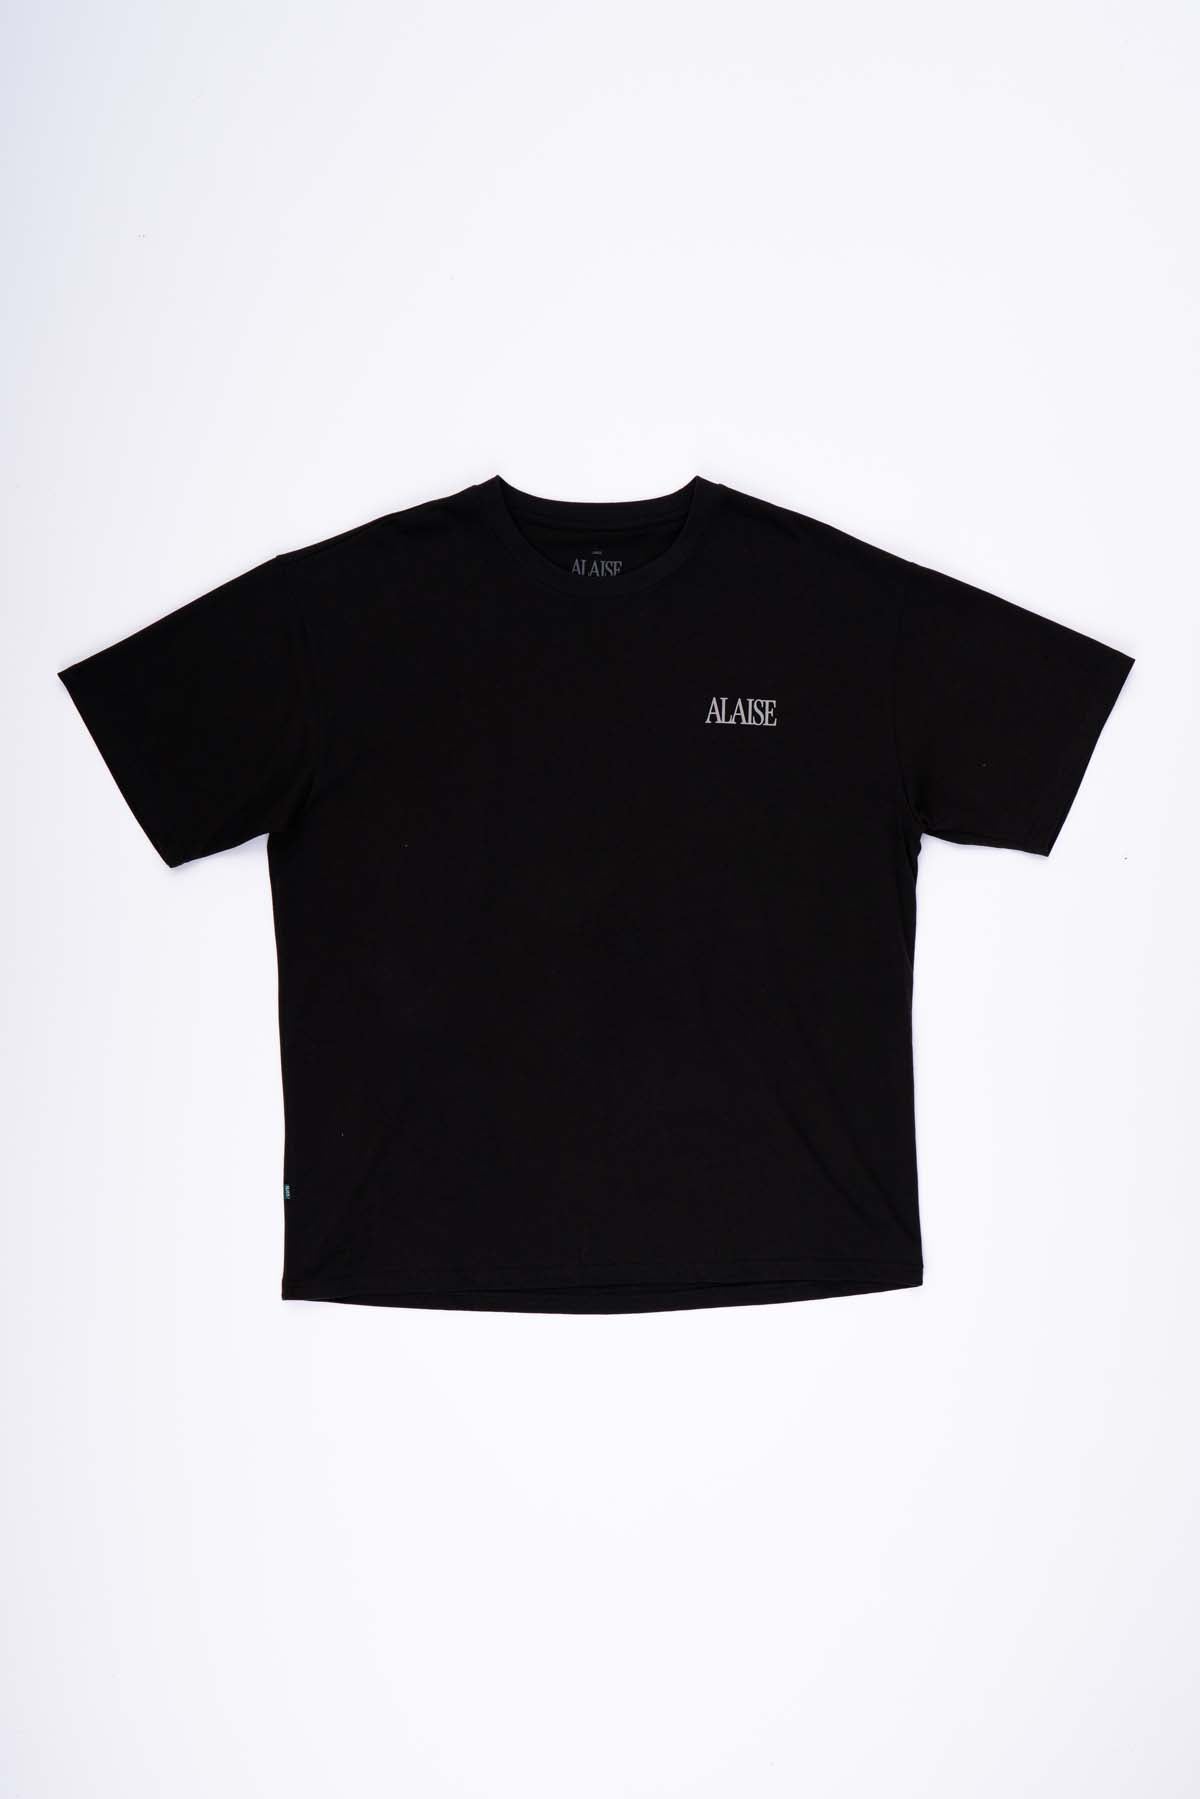 Alaise Box Fit T-Shirt - Black